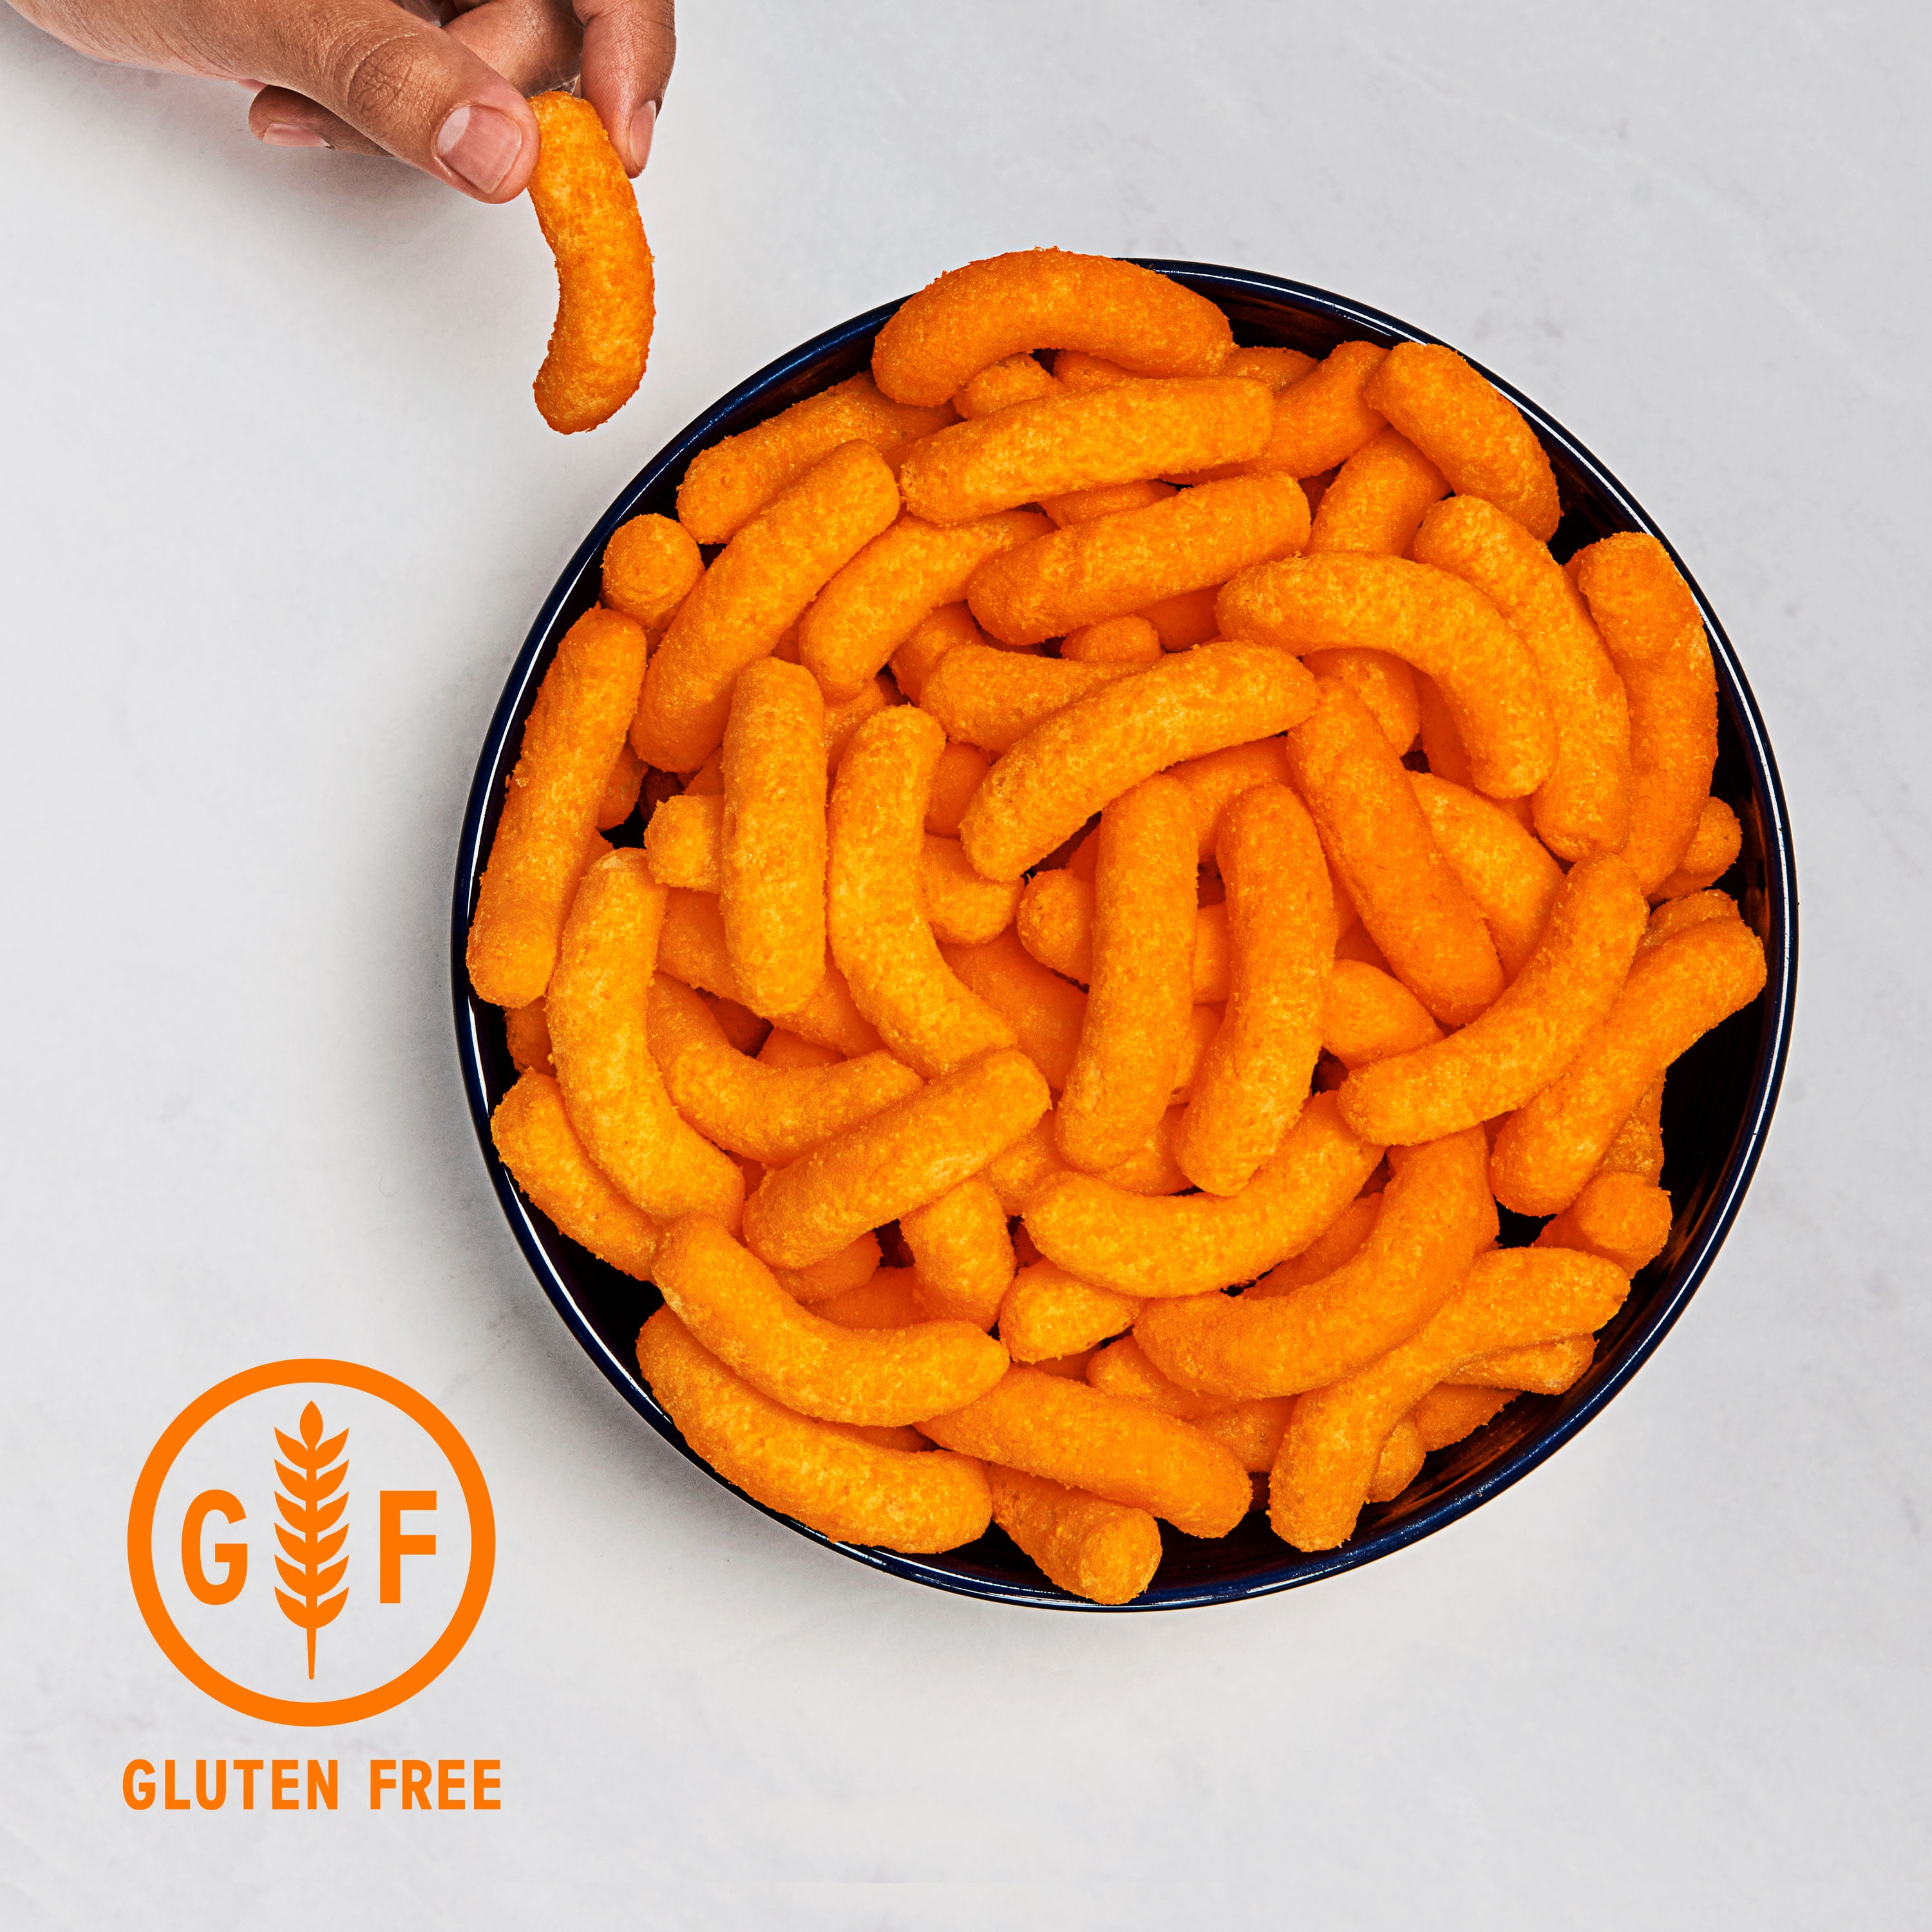 Cheetos puffs 1 3/8 oz - Dollar Store